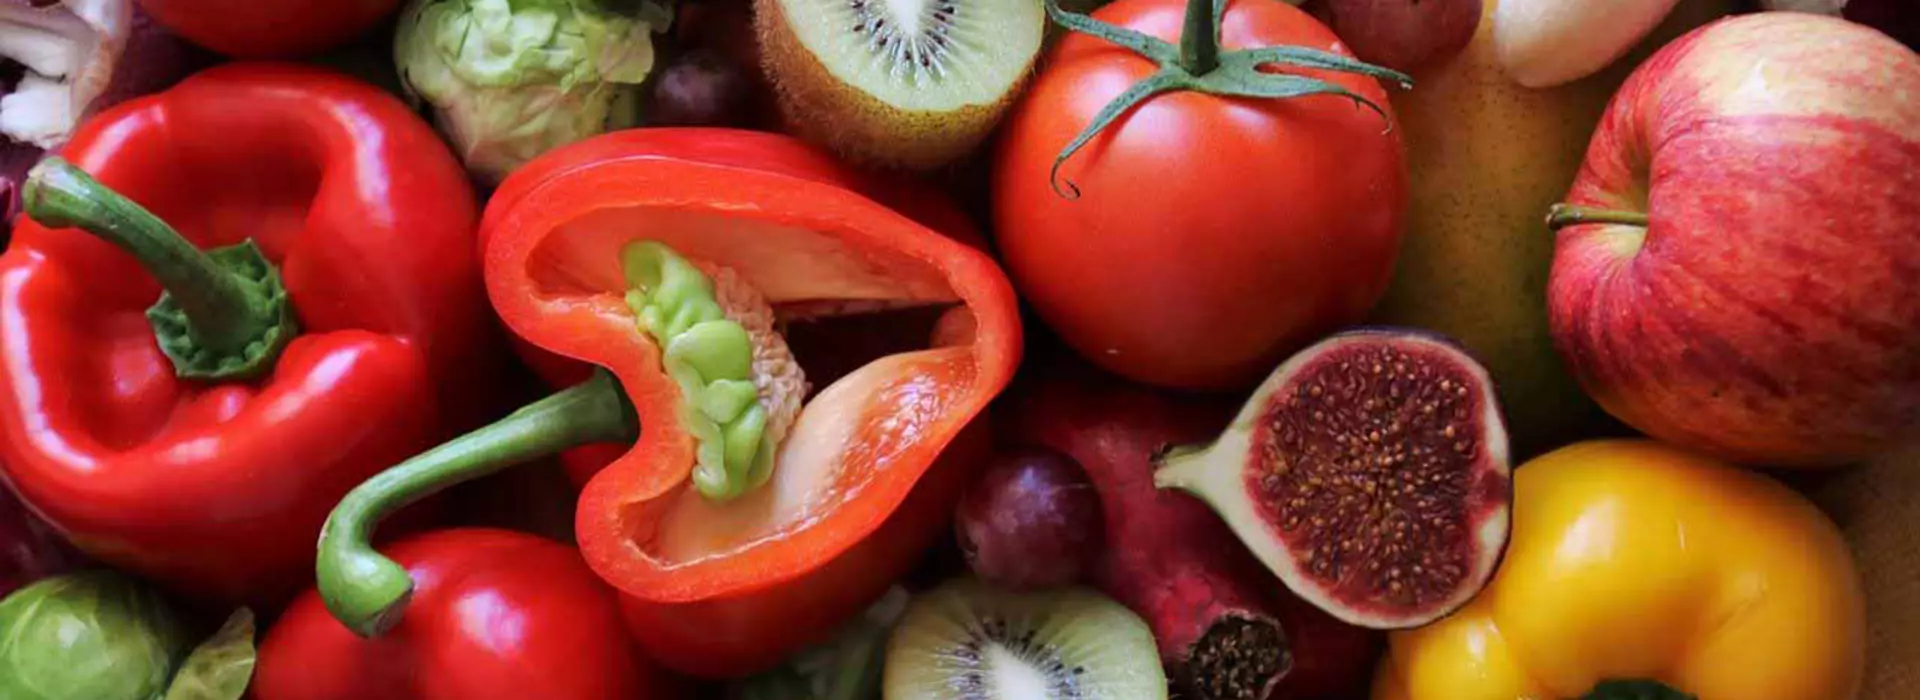 Tante varietà di lfrutta verdurai: fichi pomodori peperoni kiwi mele melograni